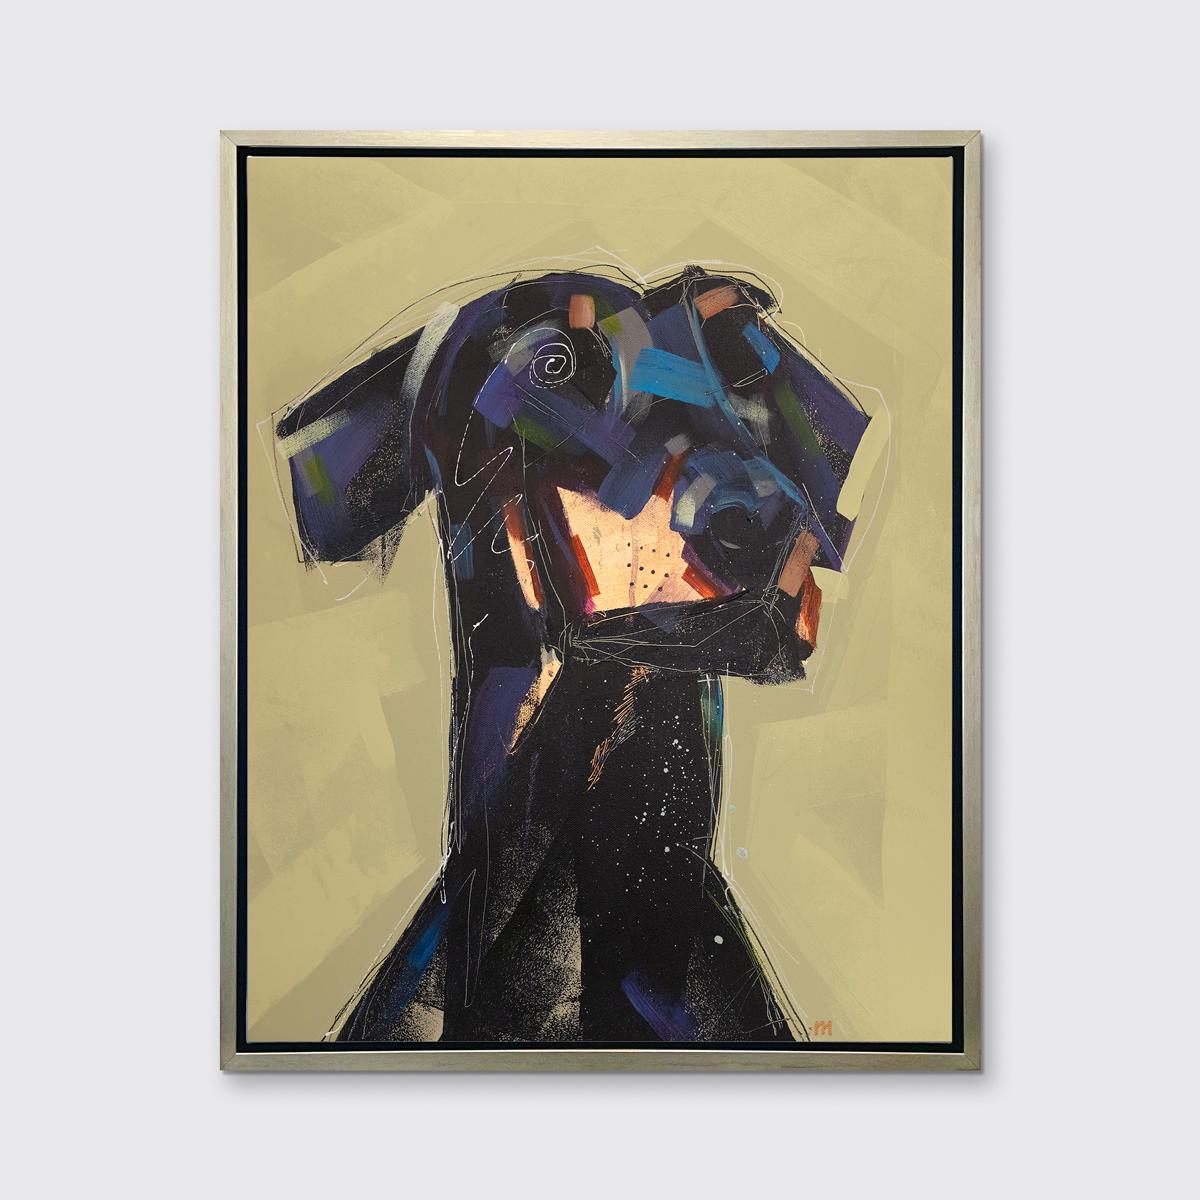 Russell Miyaki Abstract Print - "Doberman" Limited Edition Giclee Print, 60" x 48"